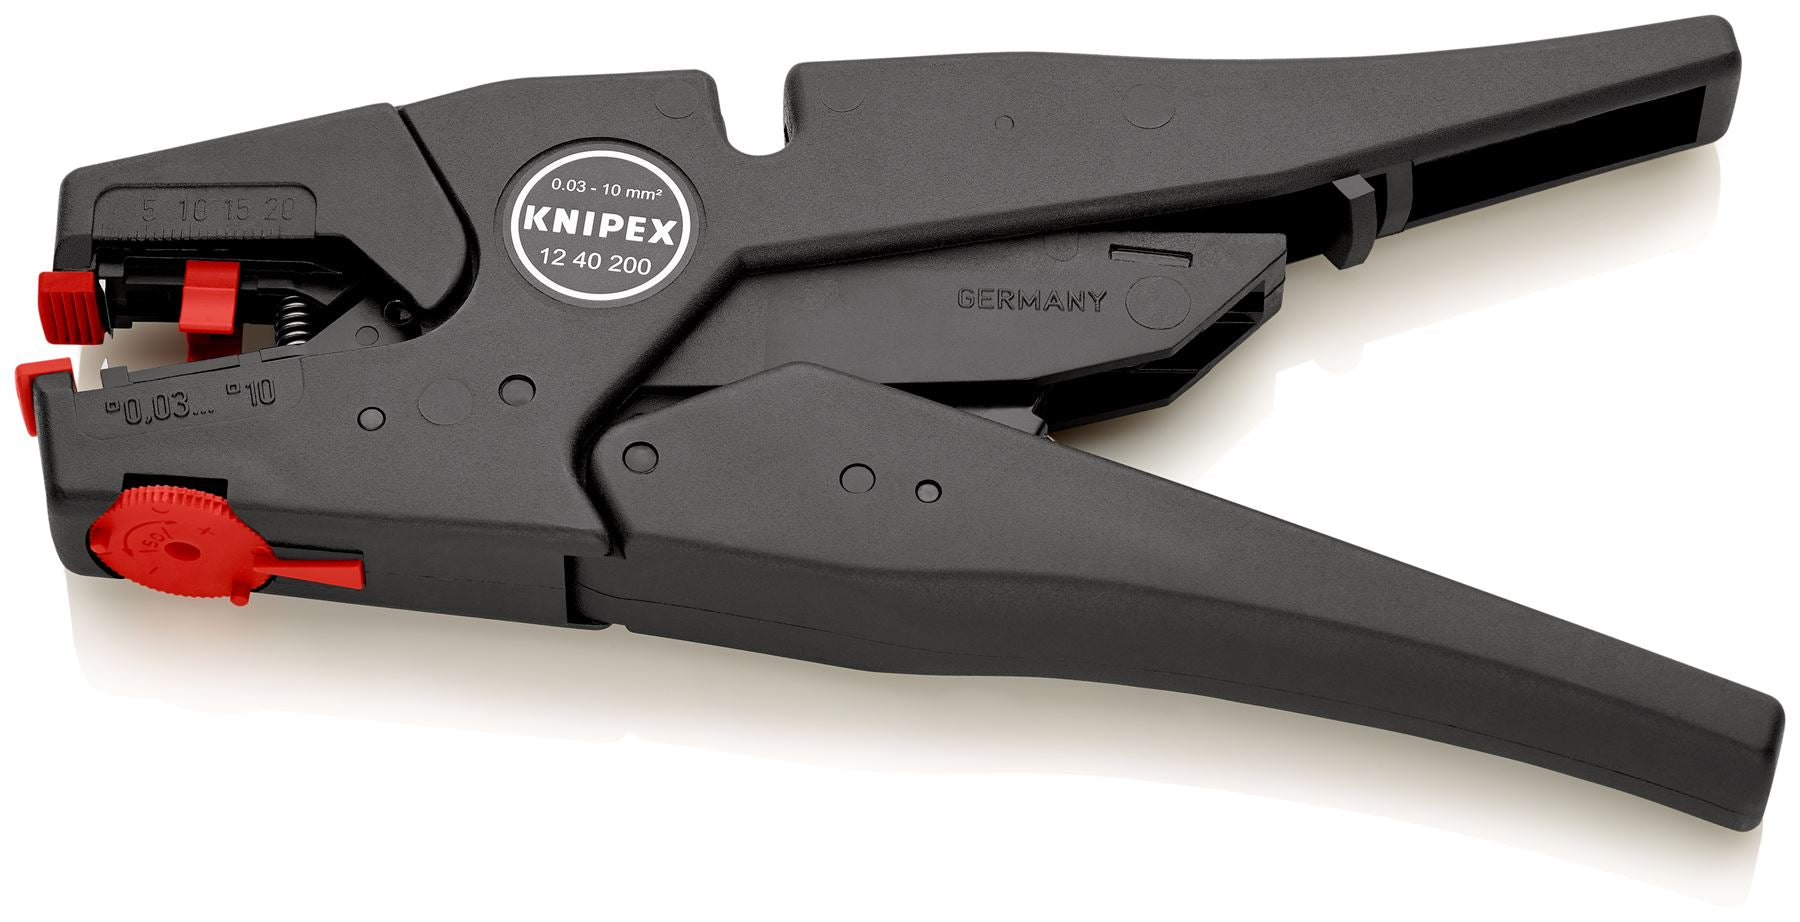 KNIPEX Self Adjusting Insulation Stripper 200mm Stripping Pliers 12 40 200